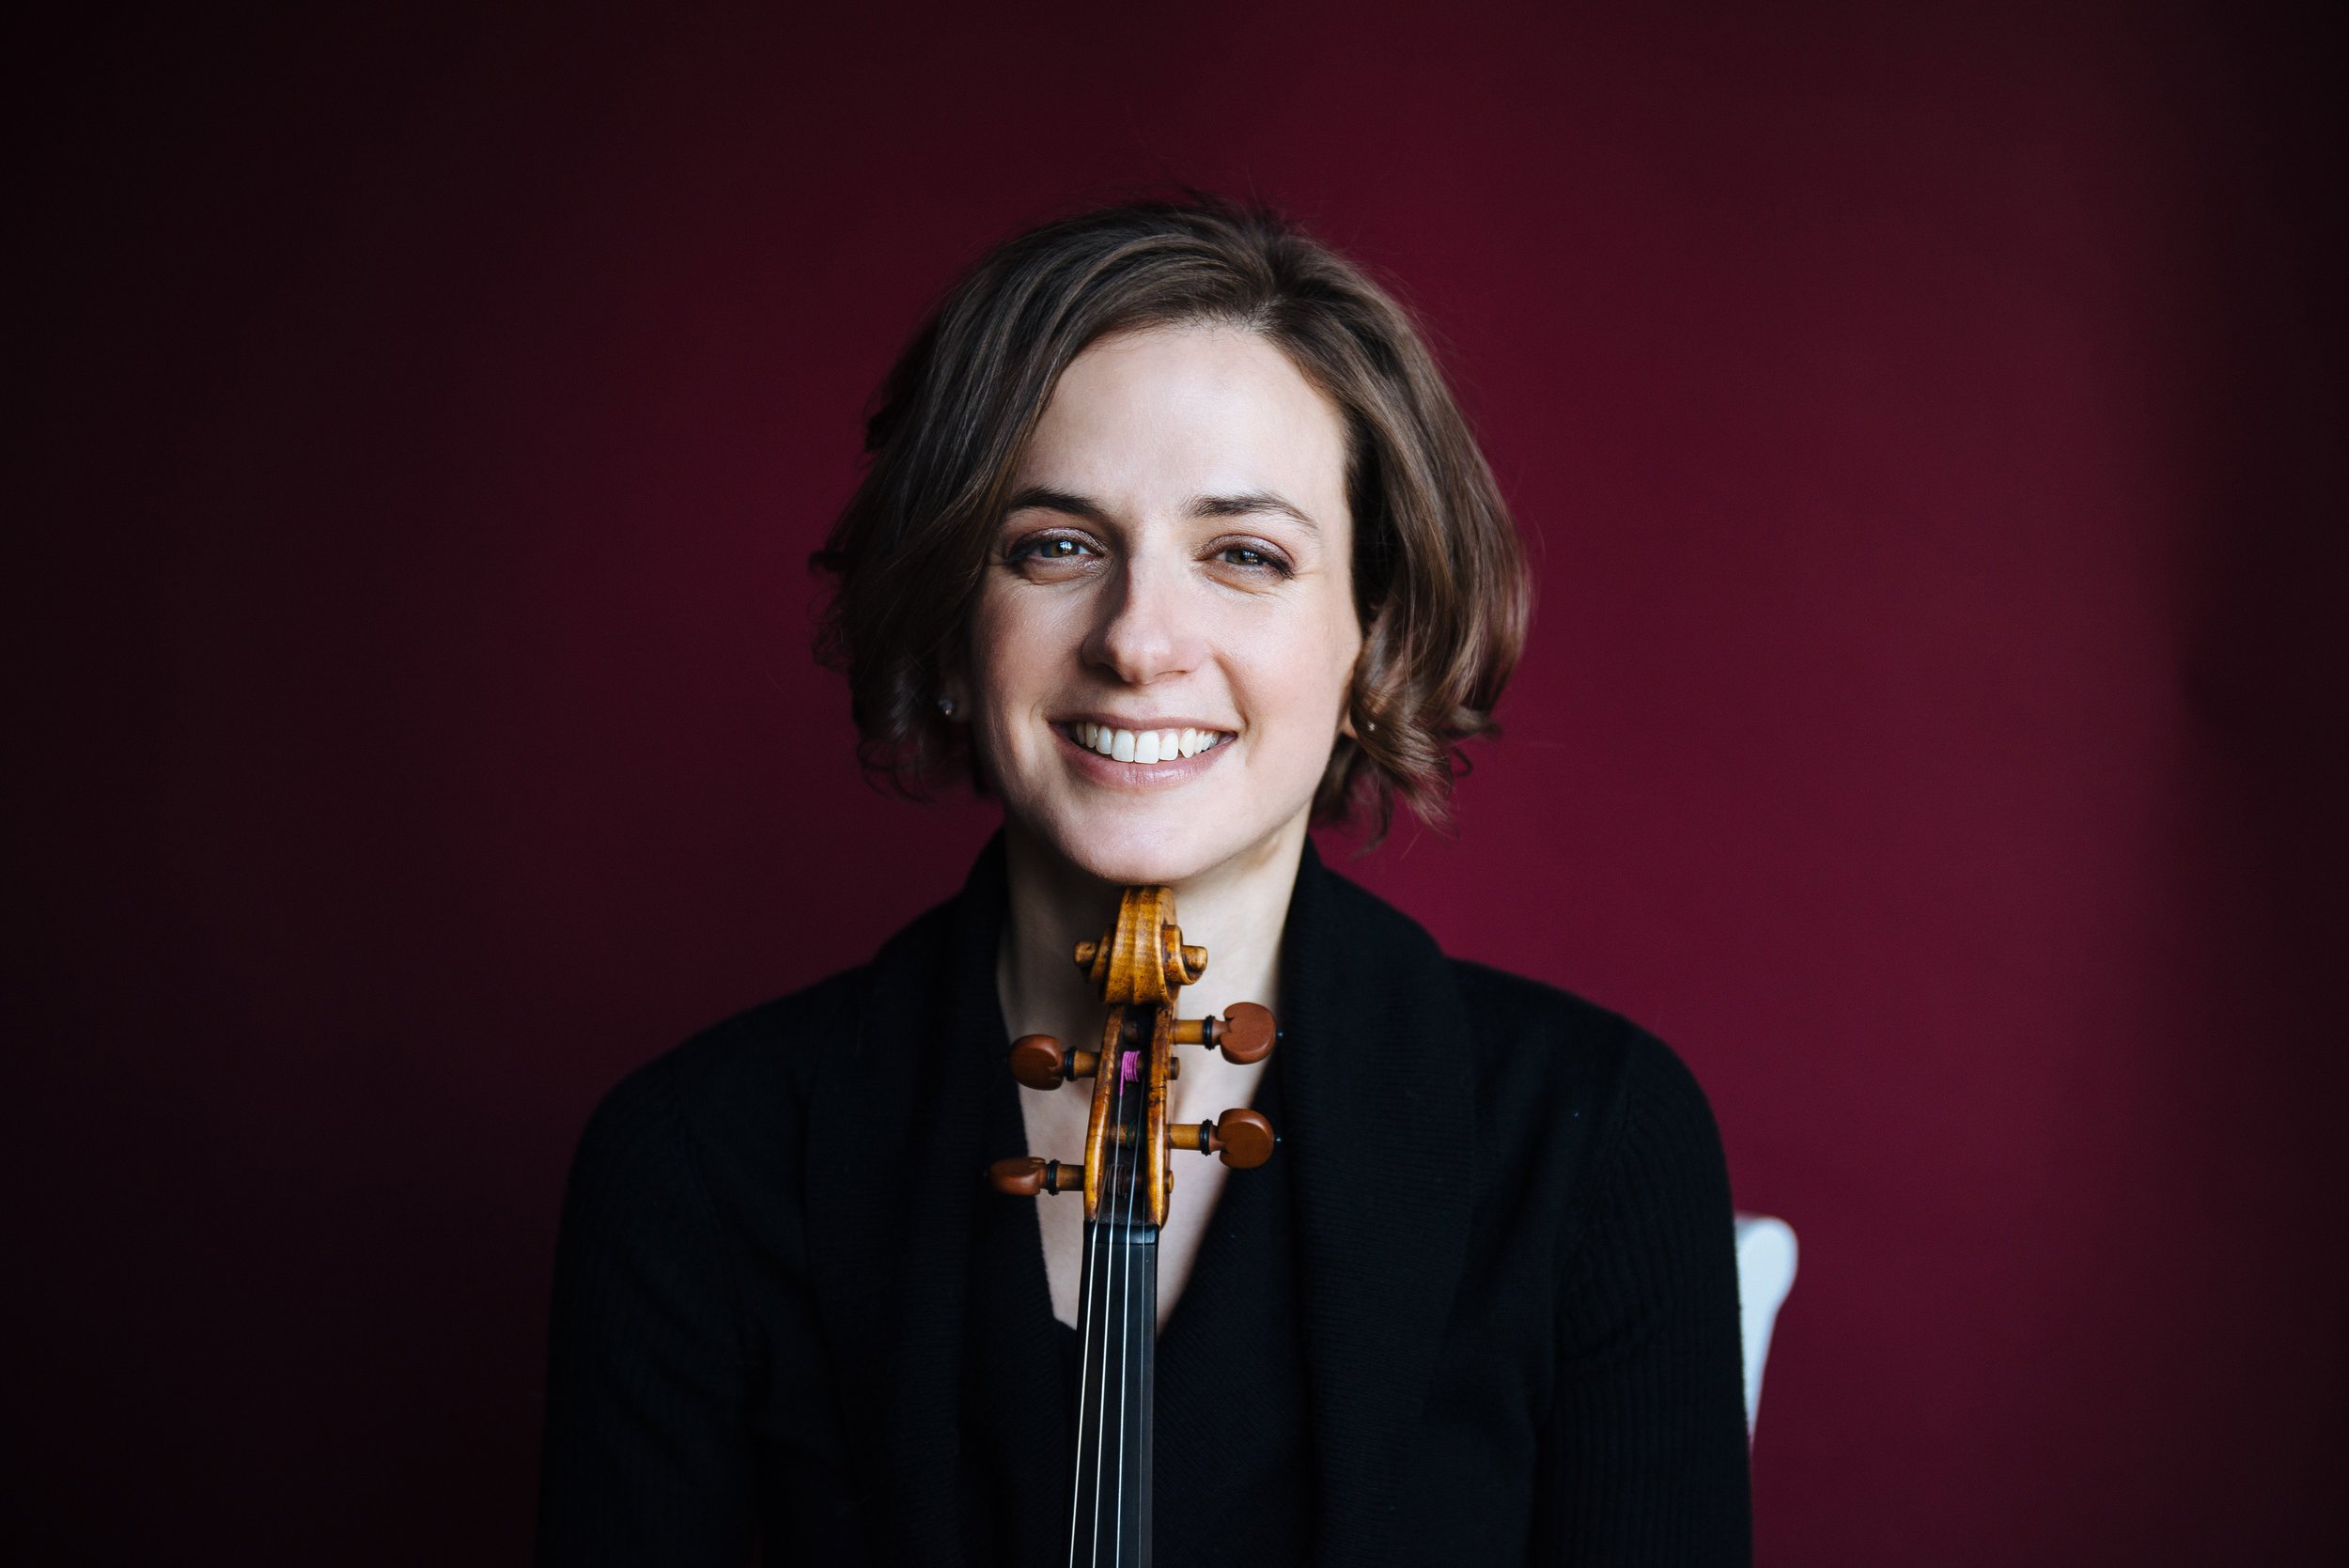 Liana Bérubé, violin